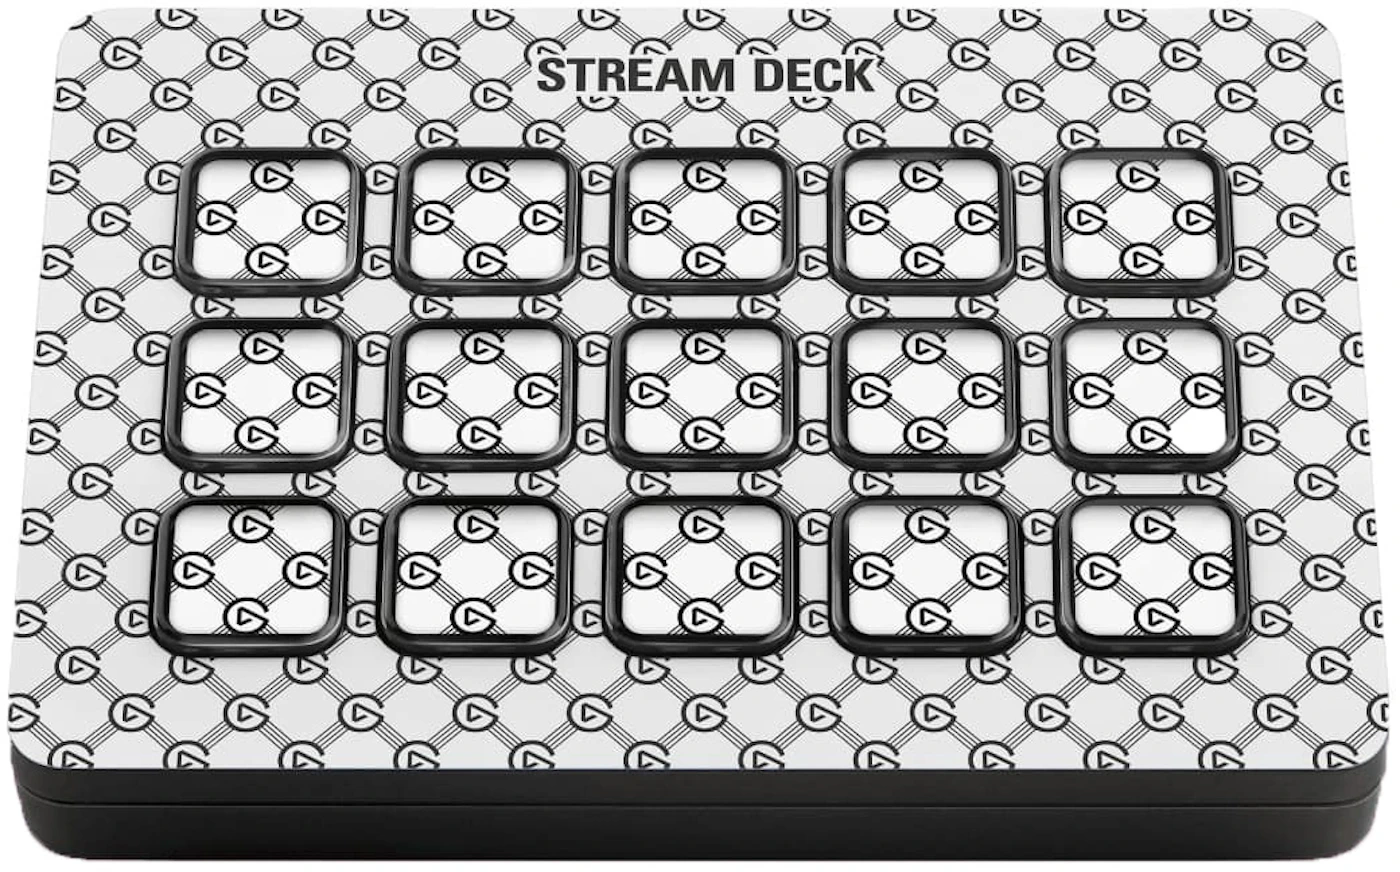 Stream Deck MK.2 - Black